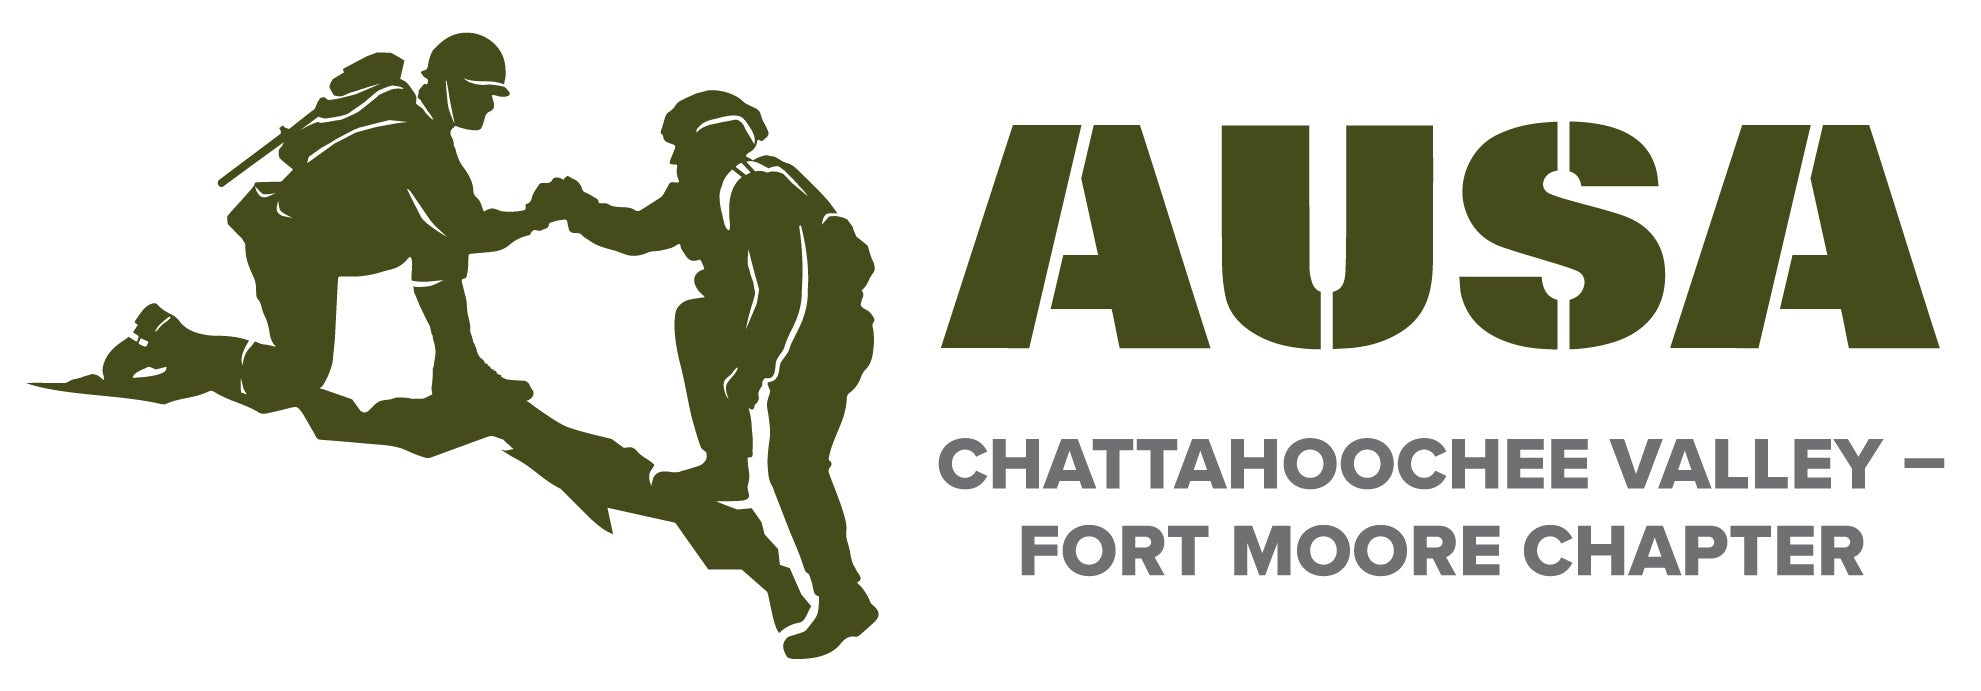 Chattahoochee Valley - Fort Moore